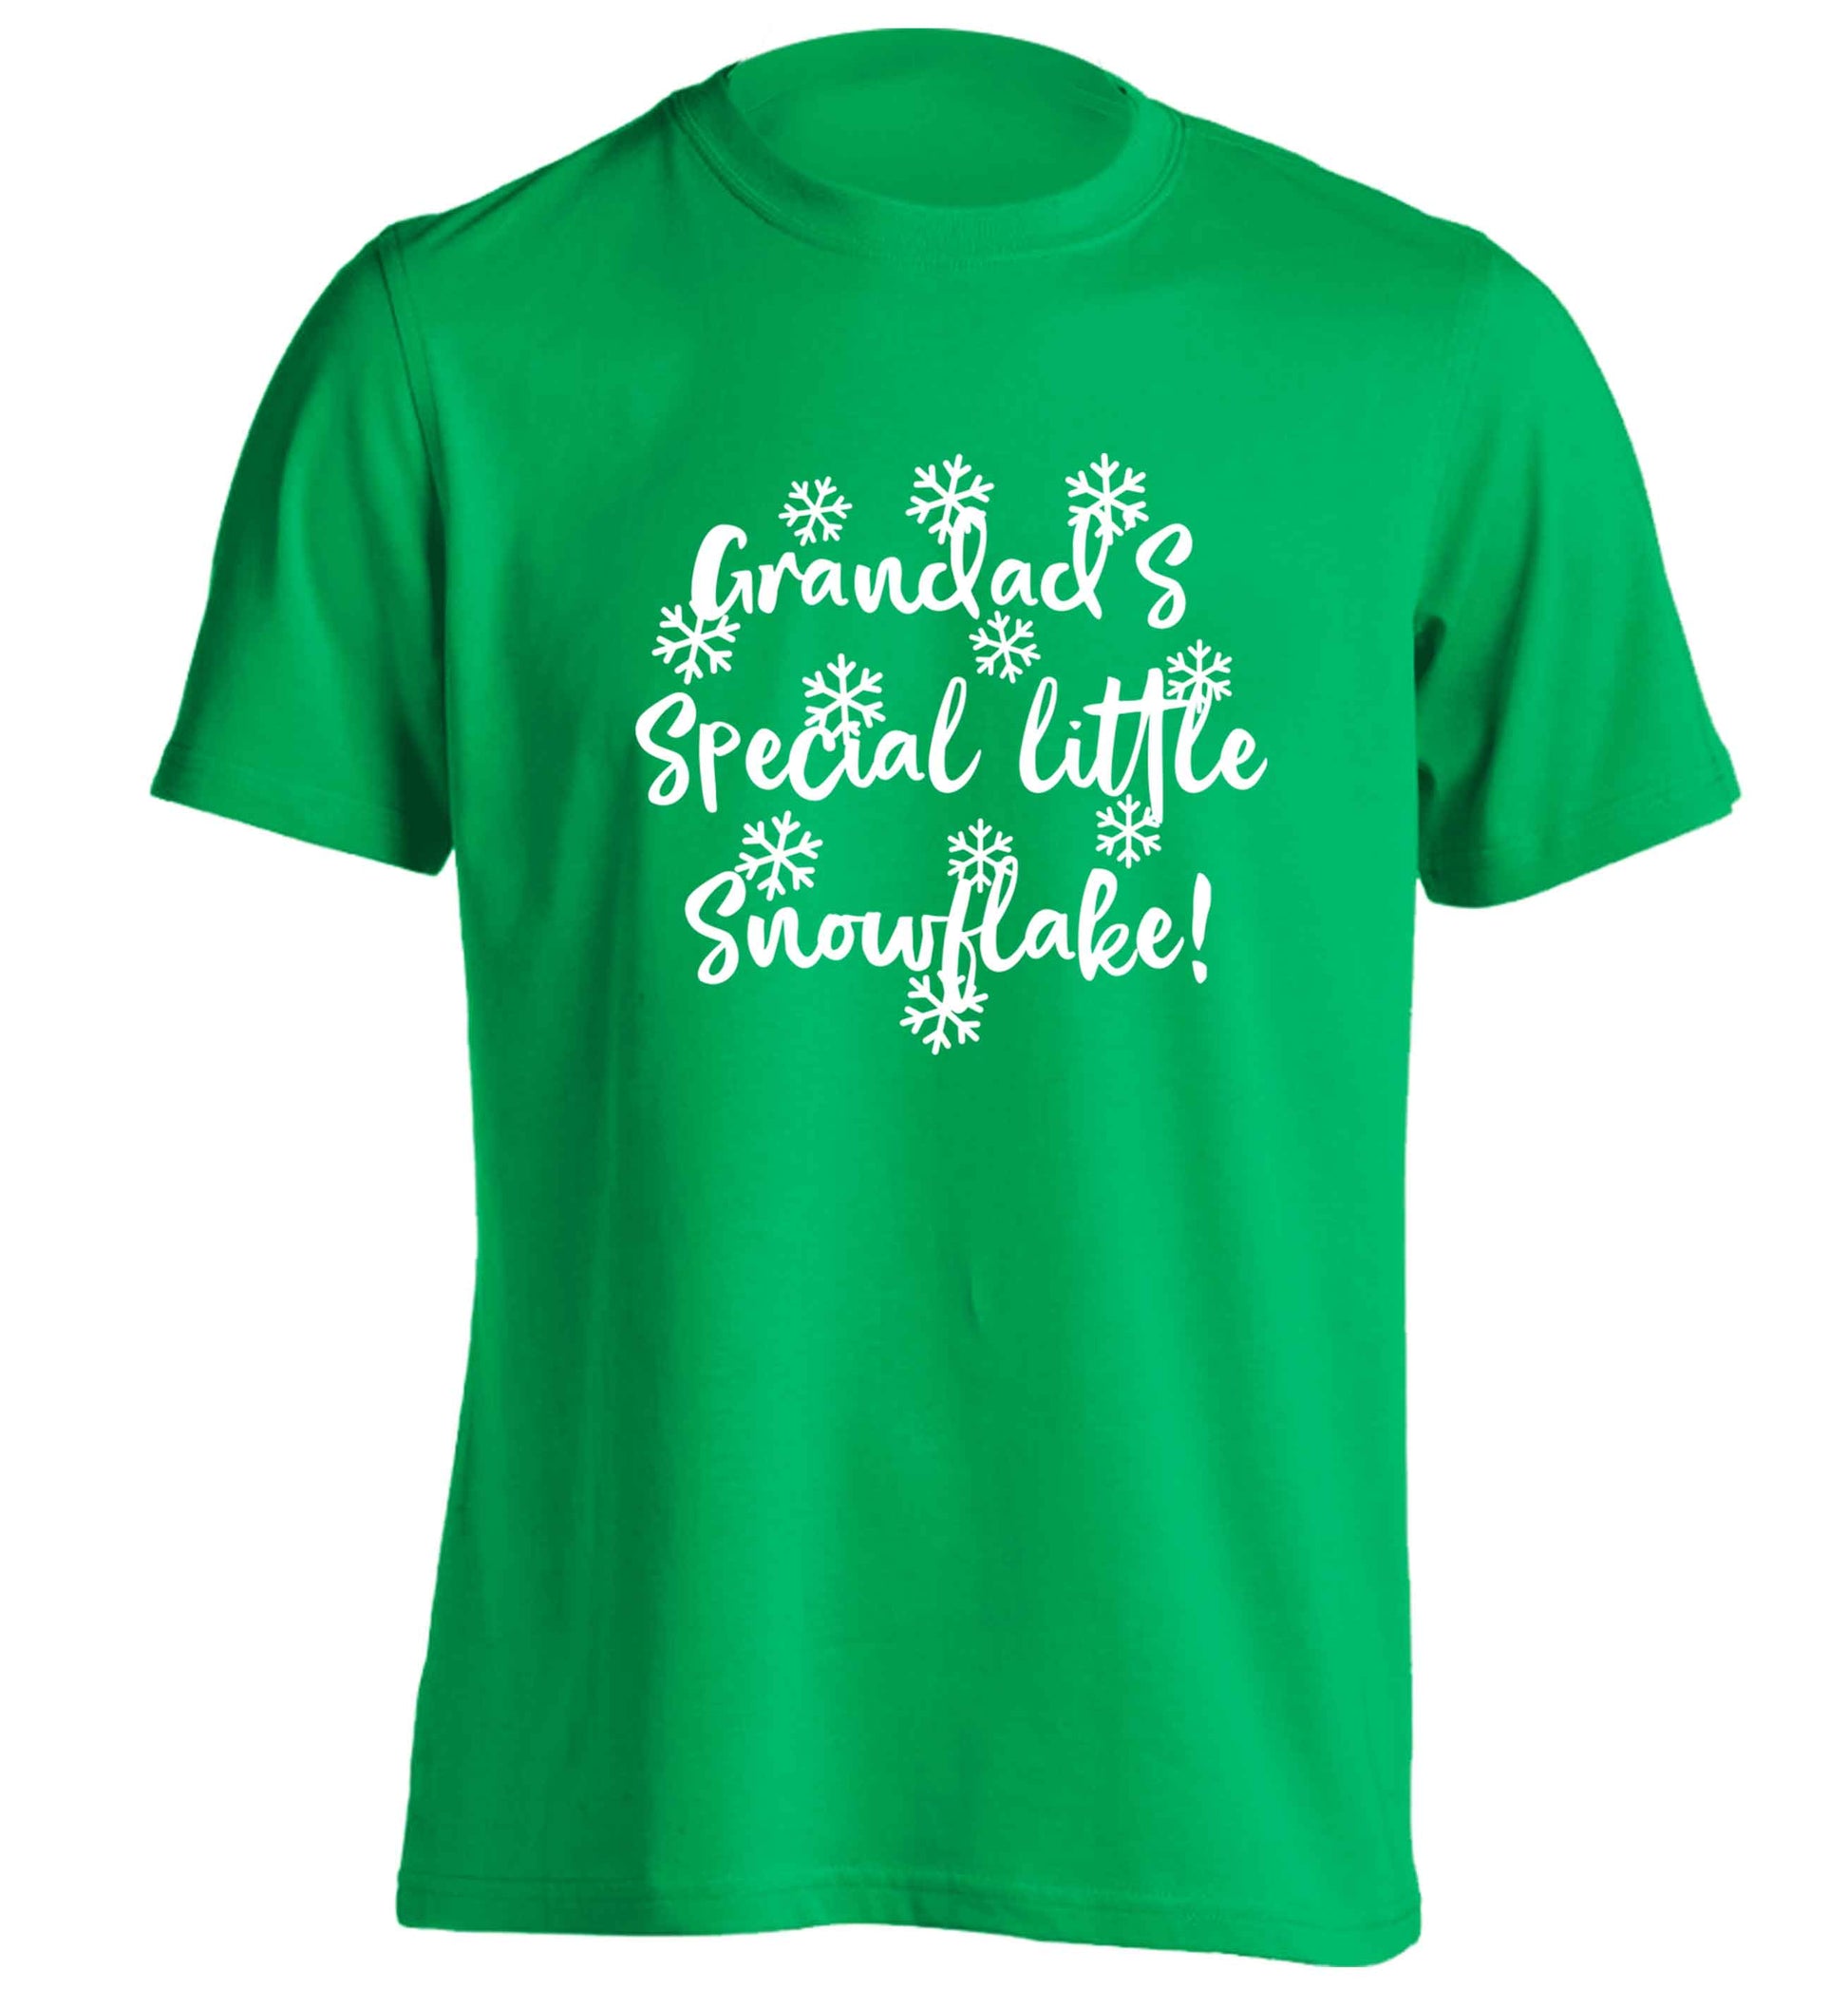 Grandad's special little snowflake adults unisex green Tshirt 2XL